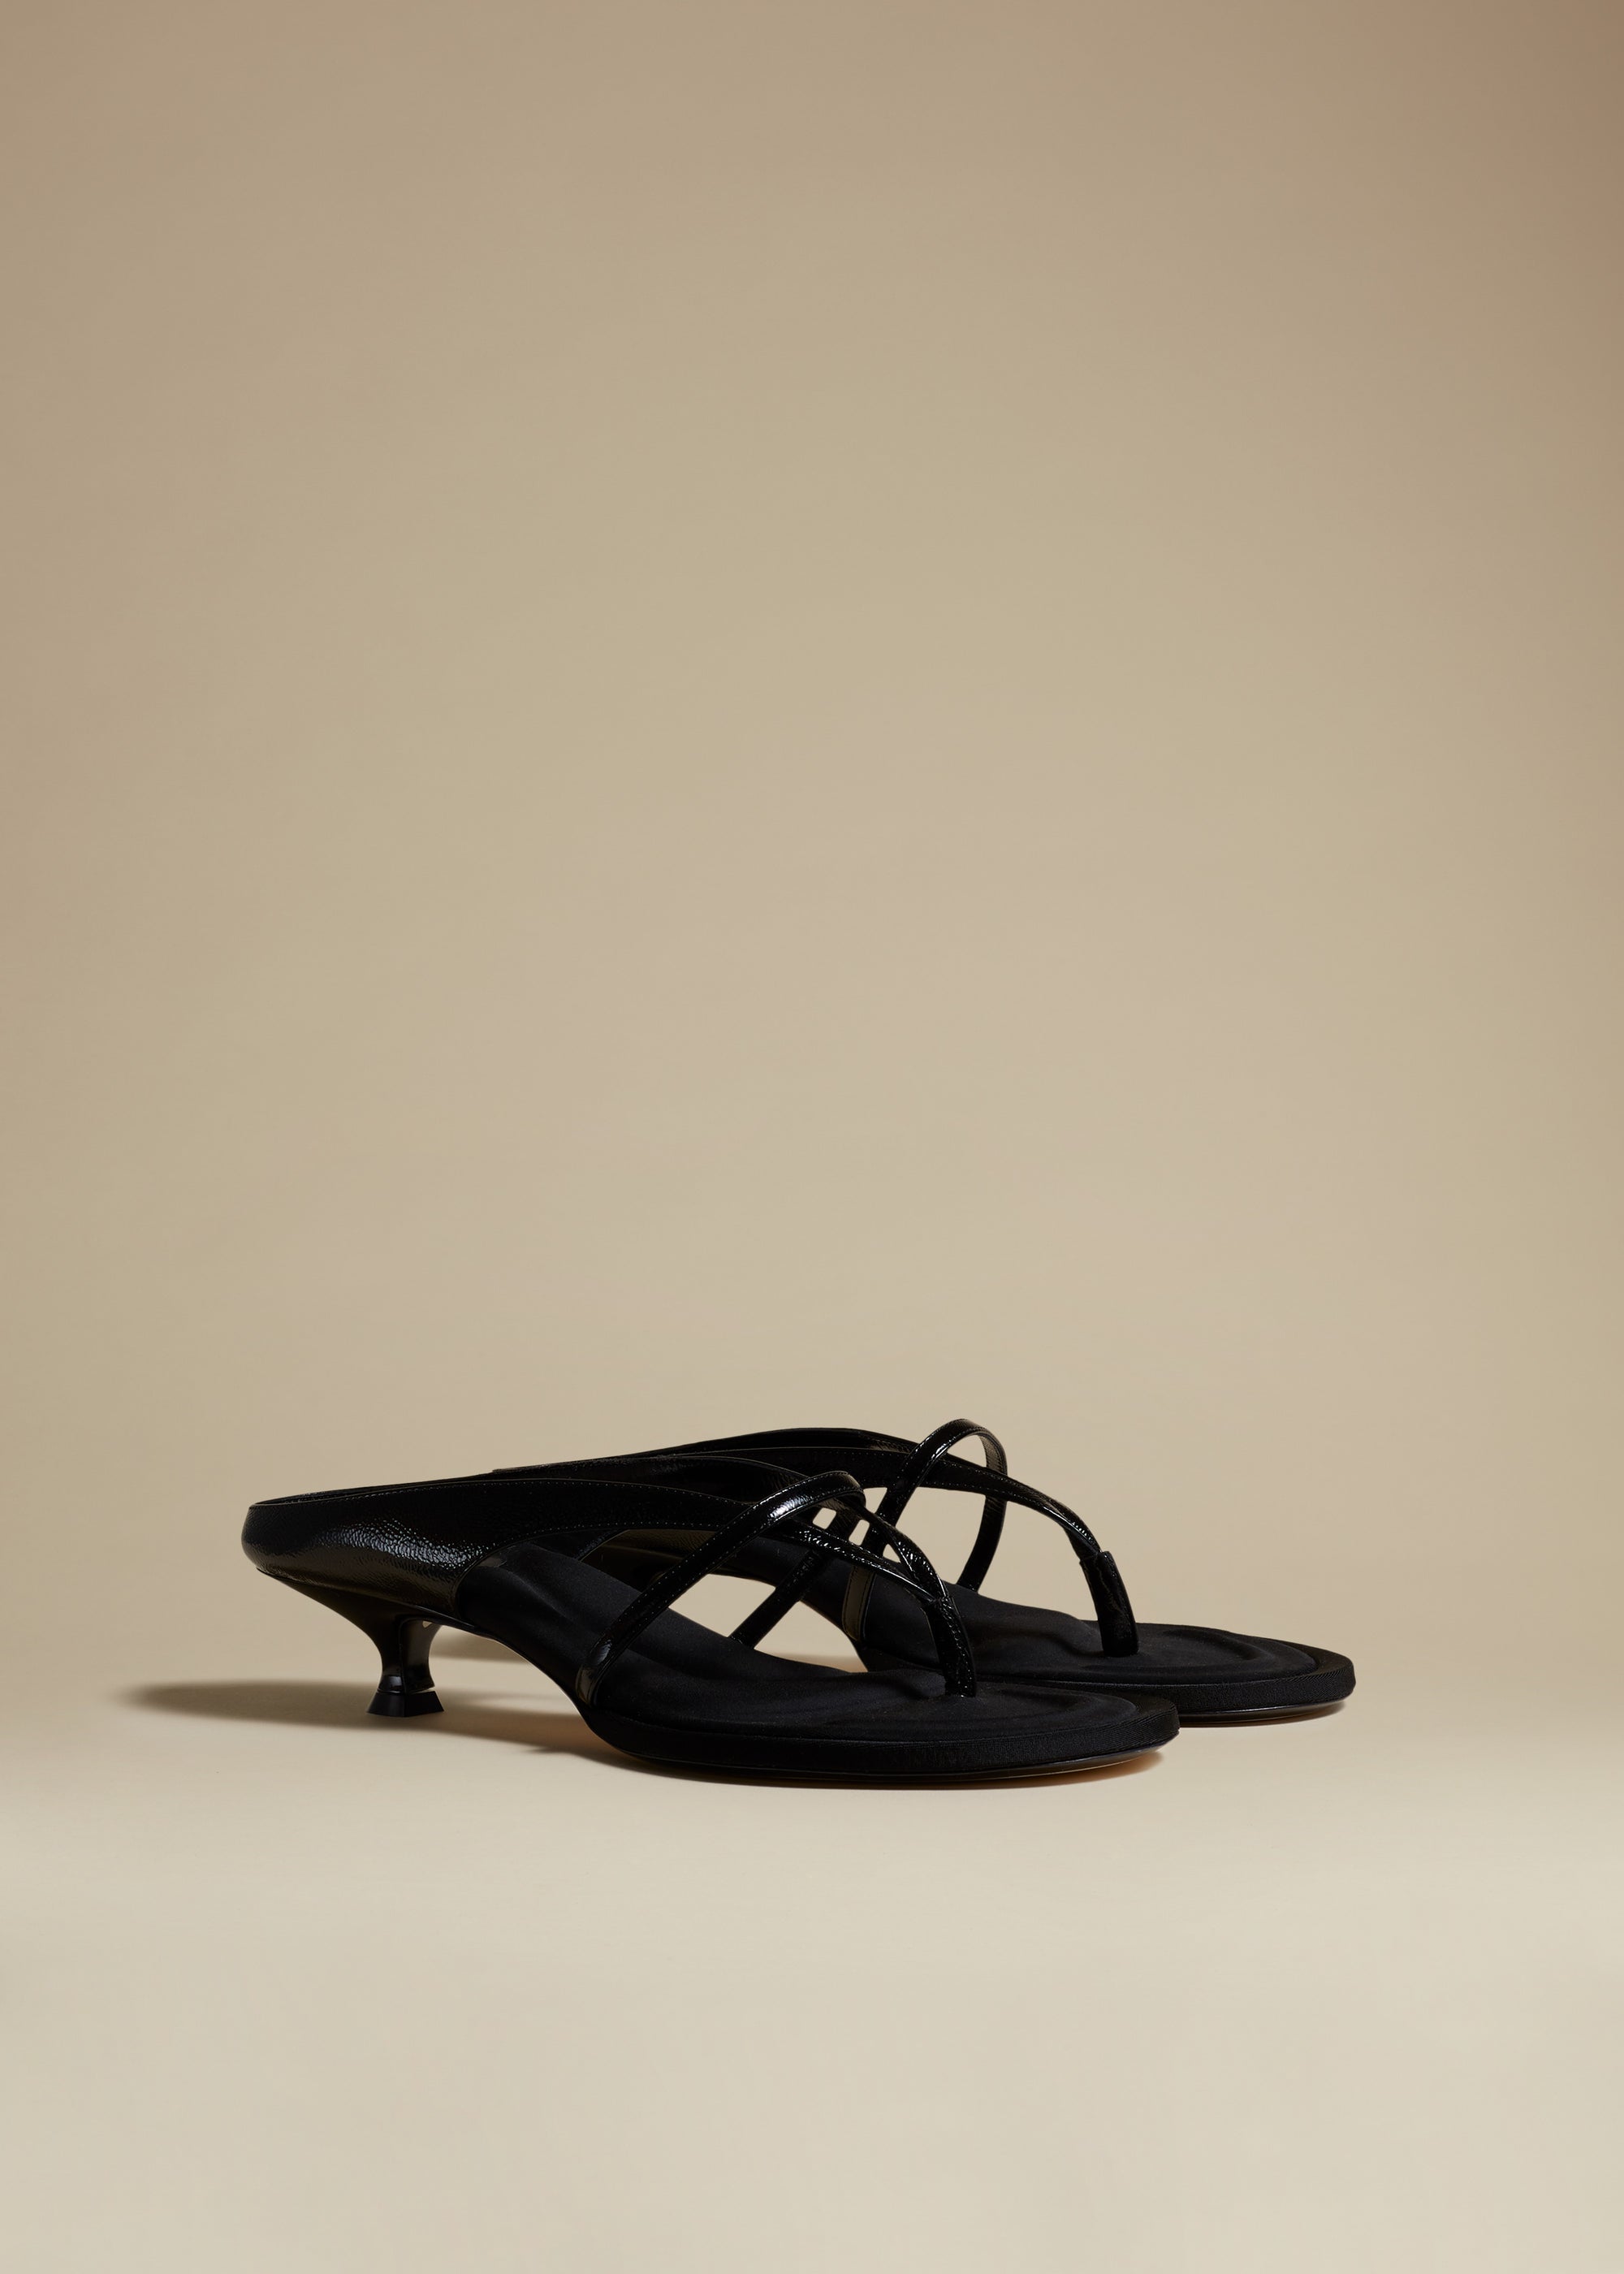 Monroe sandal in leather - Black